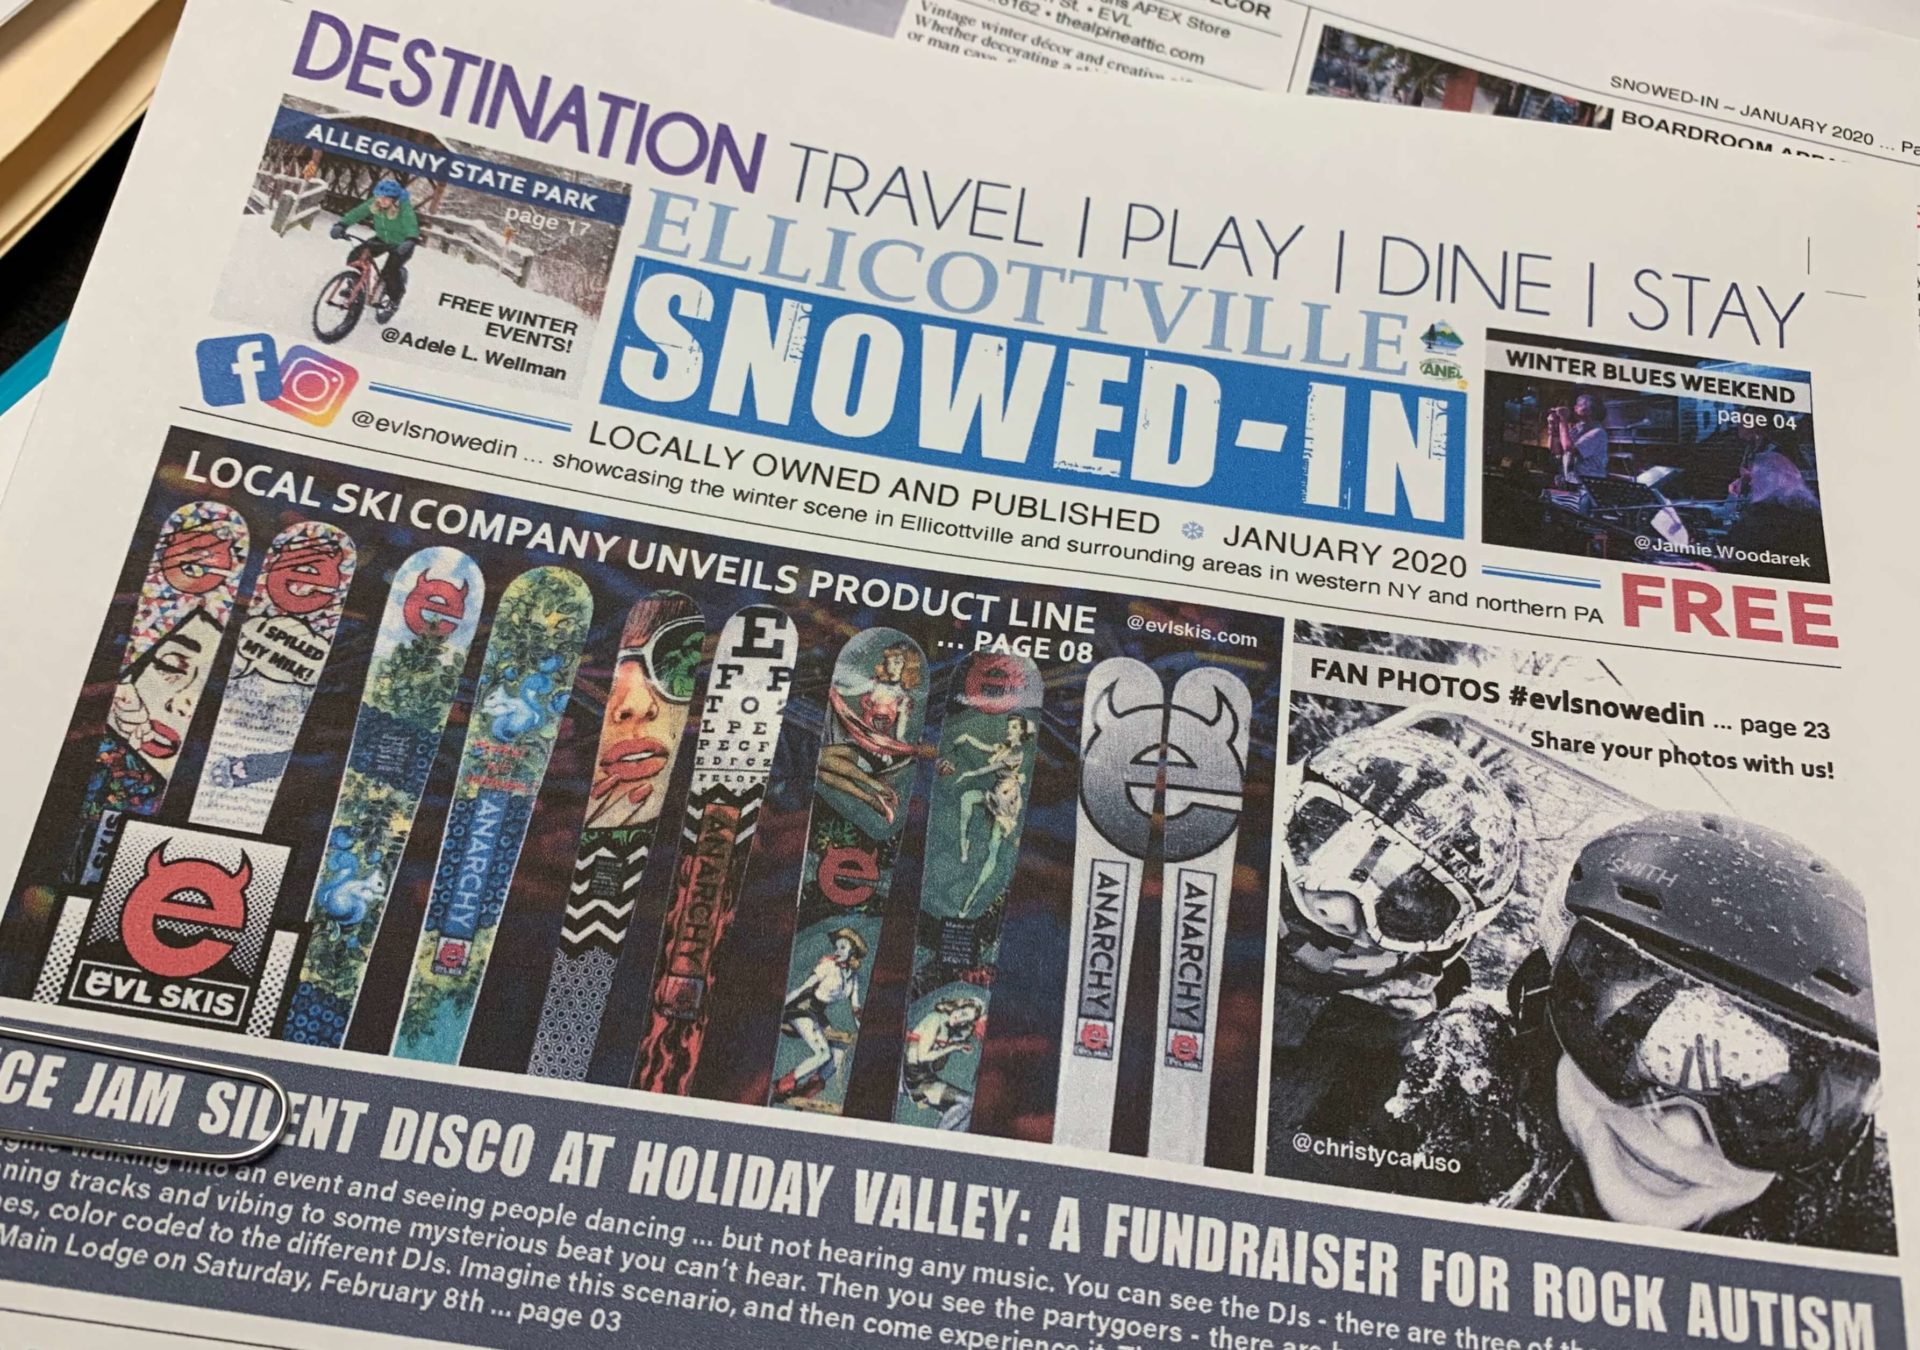 Ellicottville Snowed In Winter 2019-20 | EVL Skis